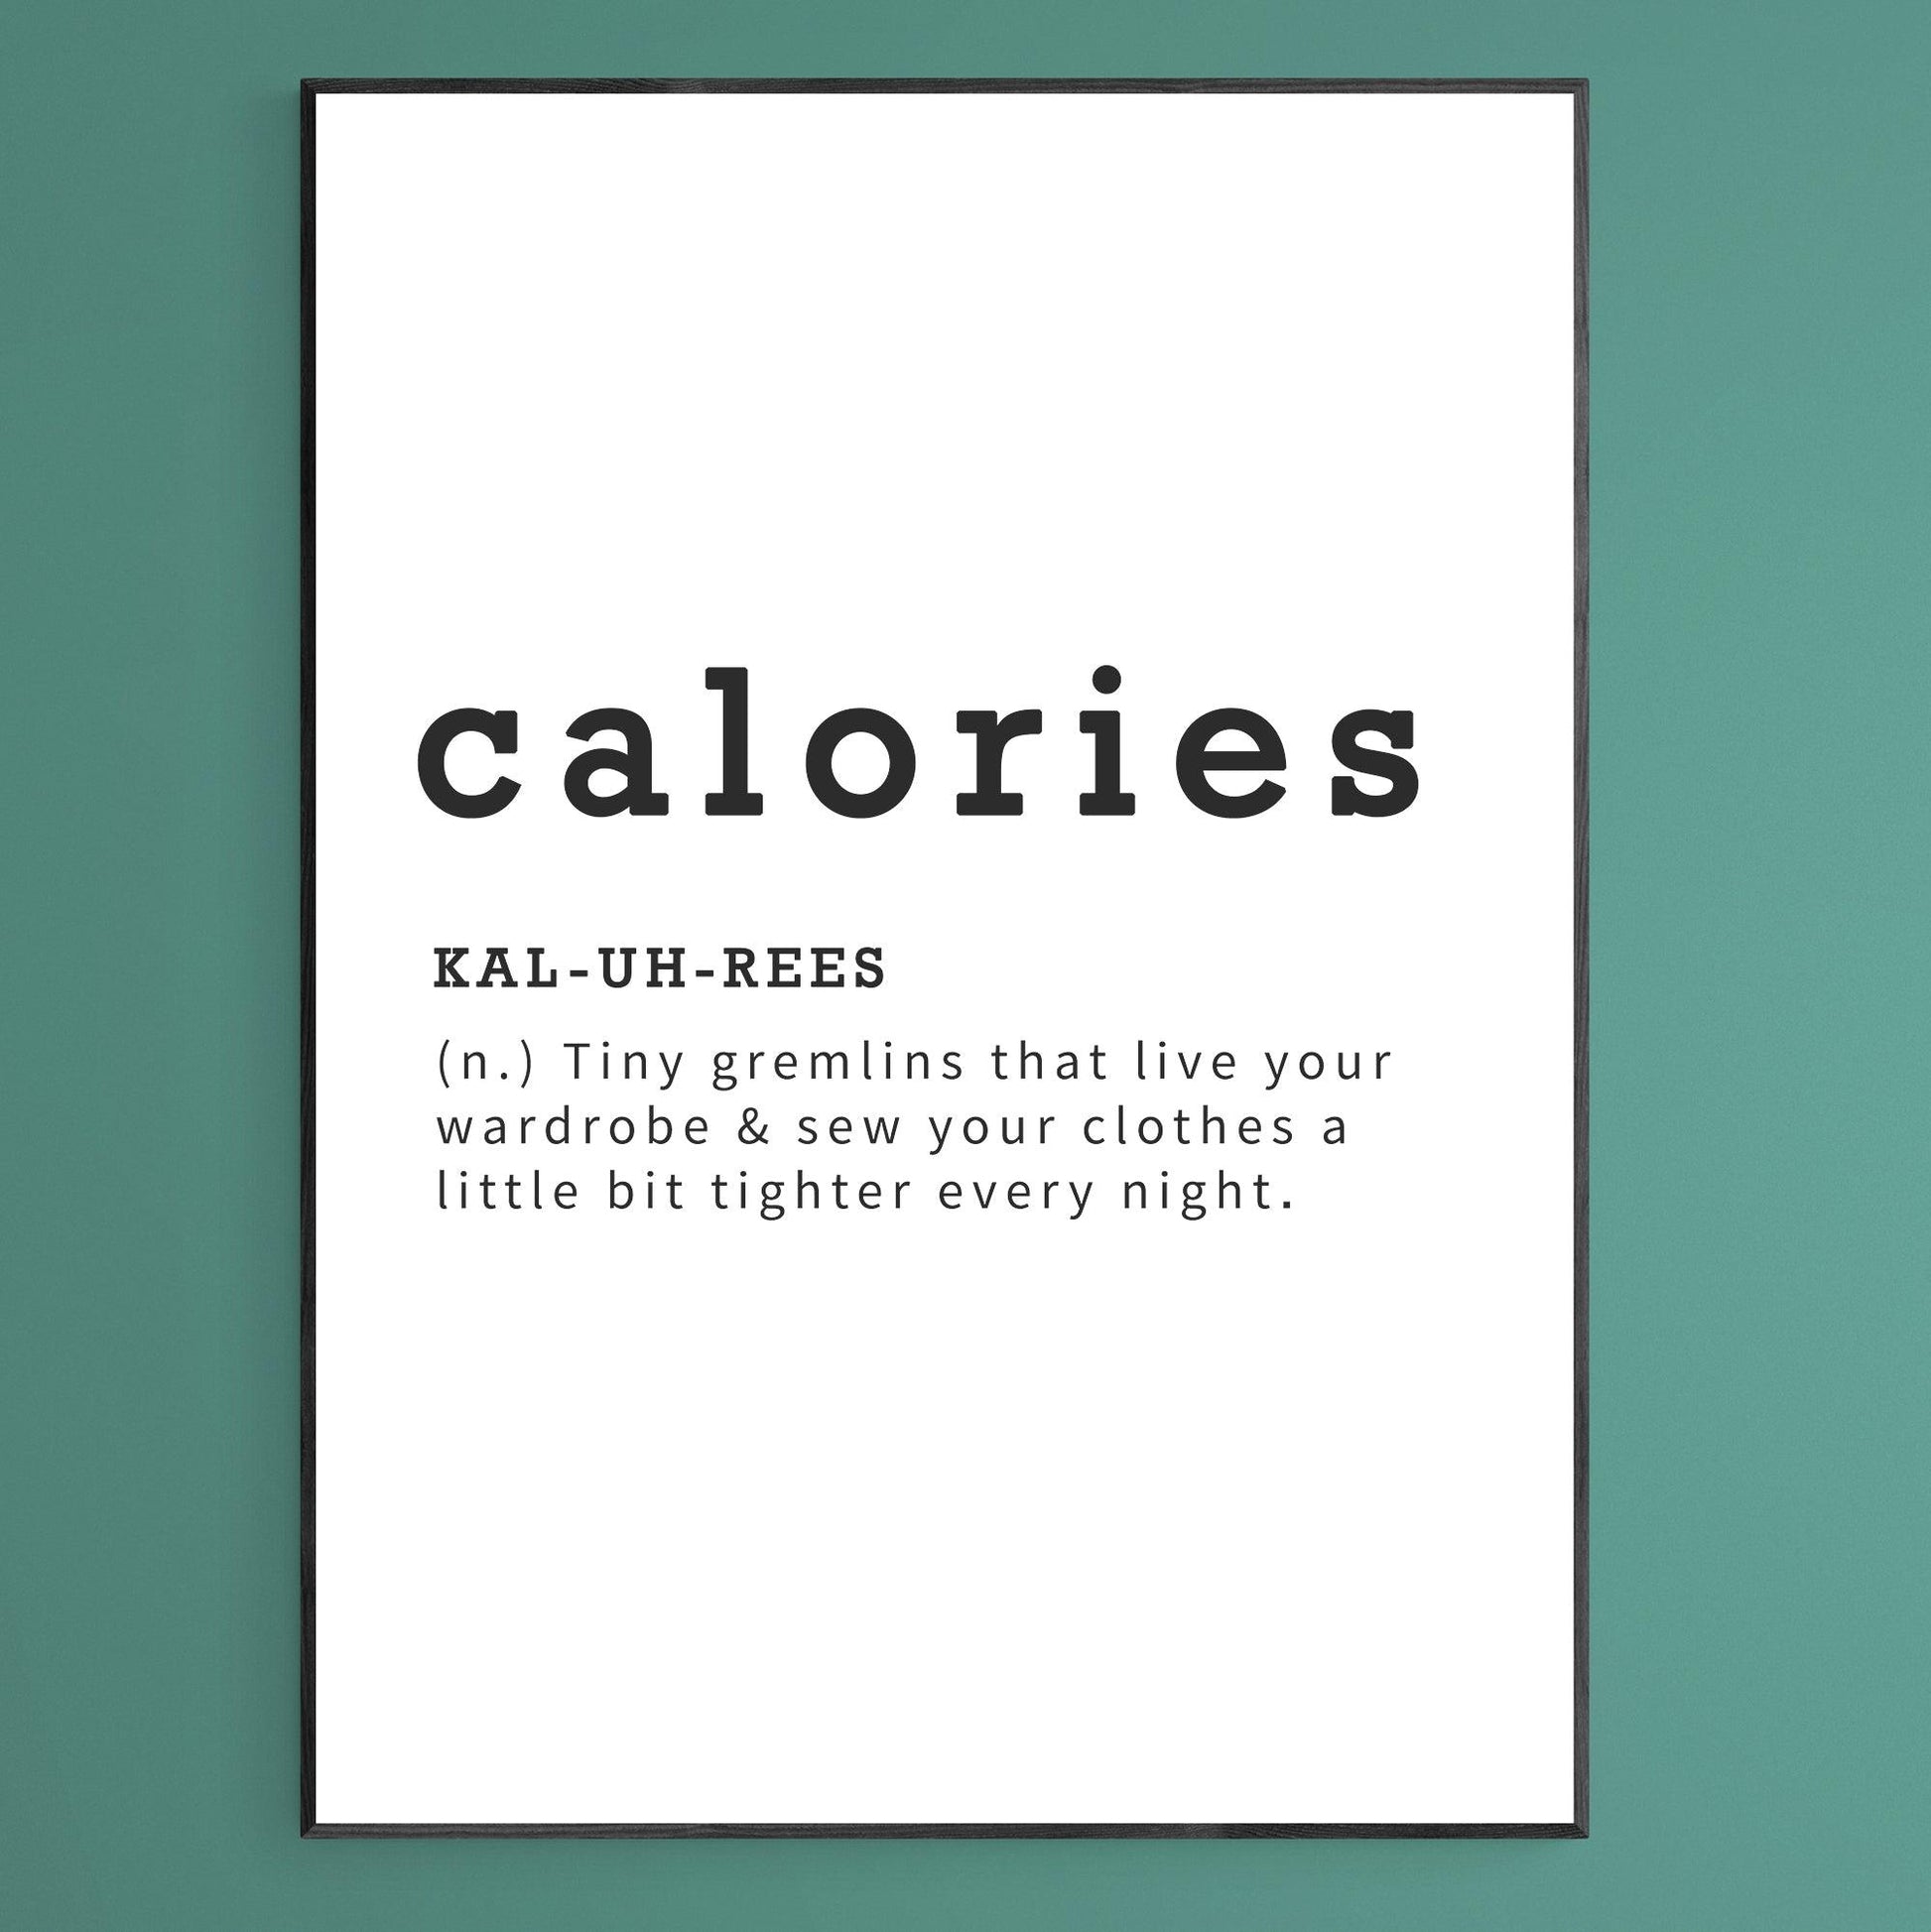 Calories Definition Print - 98types